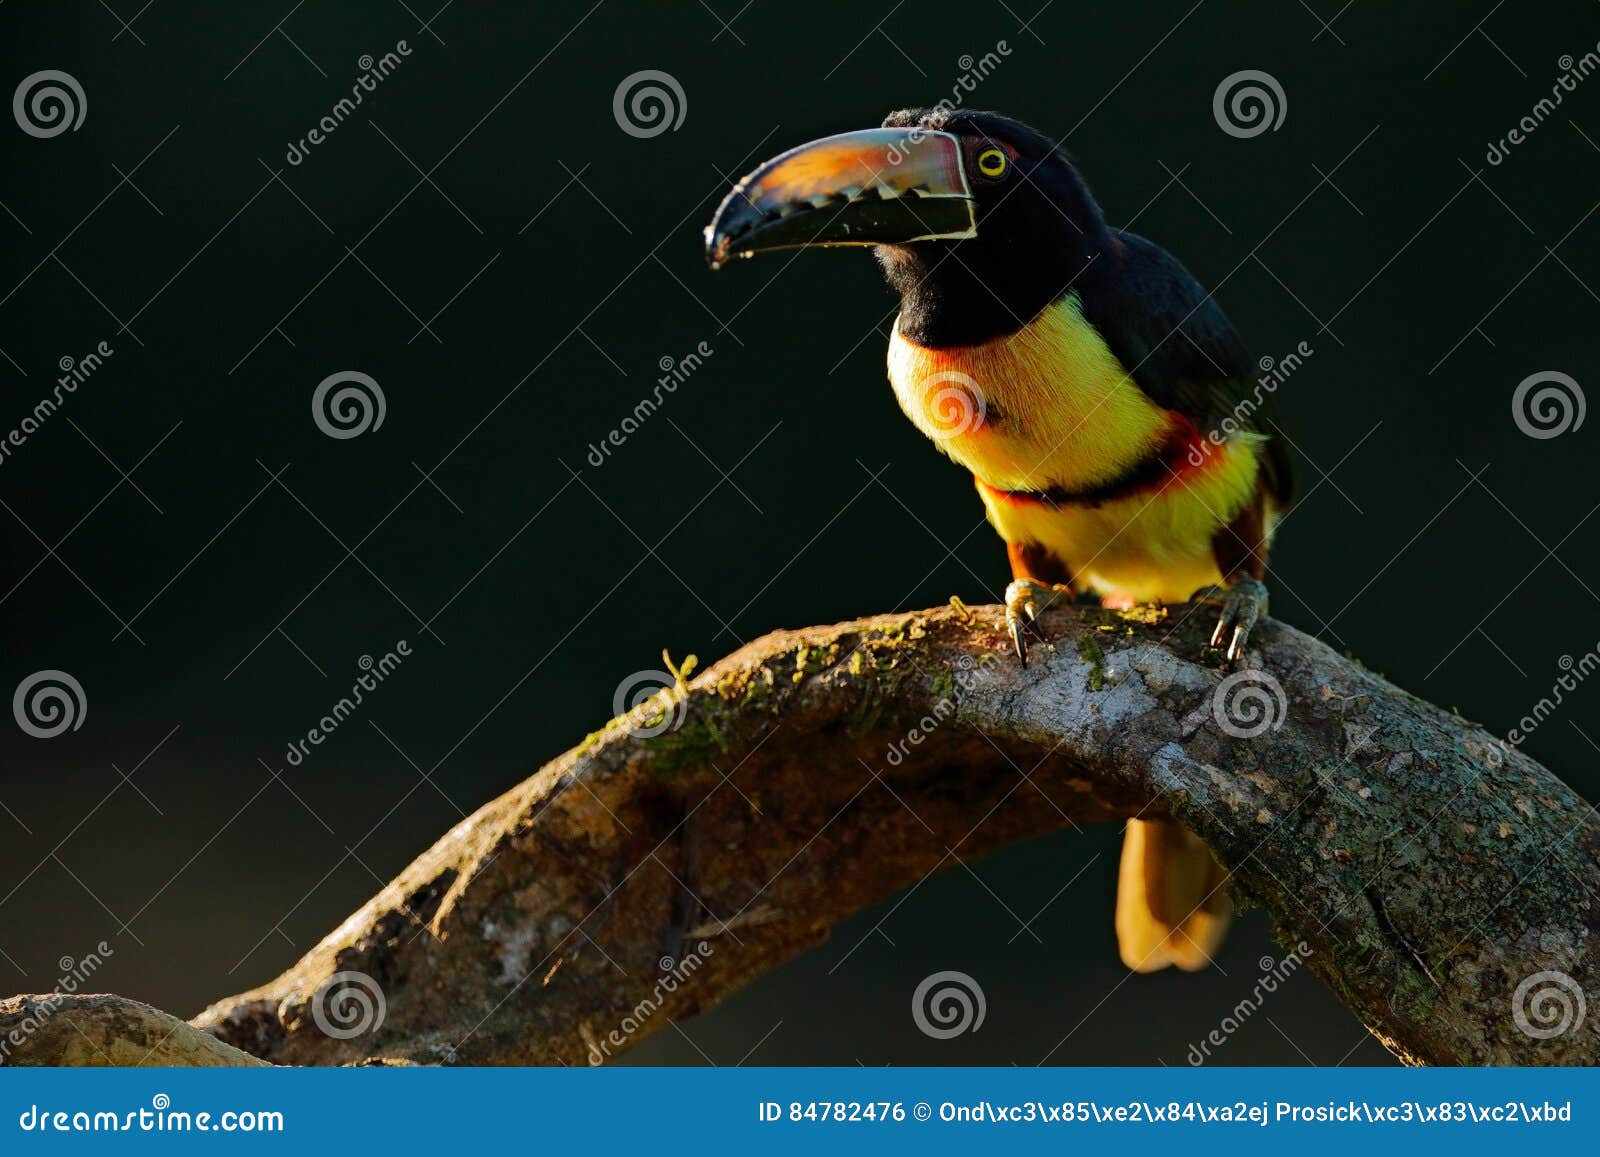 toucan sitting on the branch in the forest, boca tapada, laguna de lagarto lodge, costa rica. nature bird travel in central americ